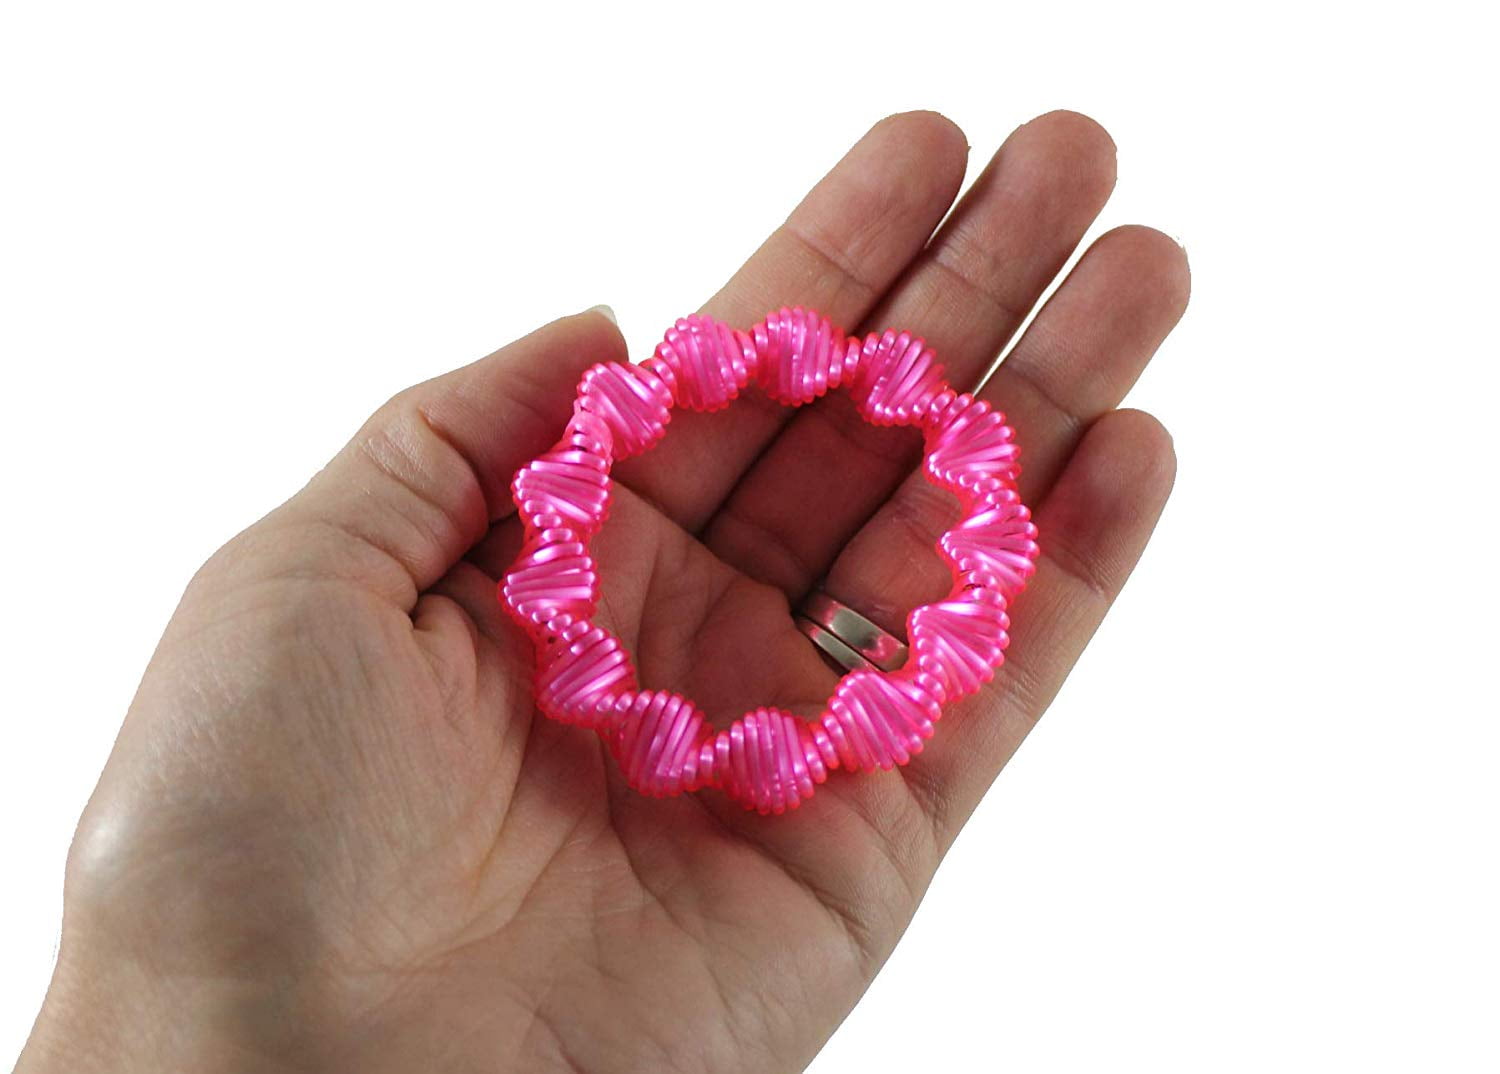 Curious Minds Busy Bright Spring Coil Fidget Bracelets - Sensory Fidget Toy Bulk - Set of 12 Bracelets (1 Dozen)